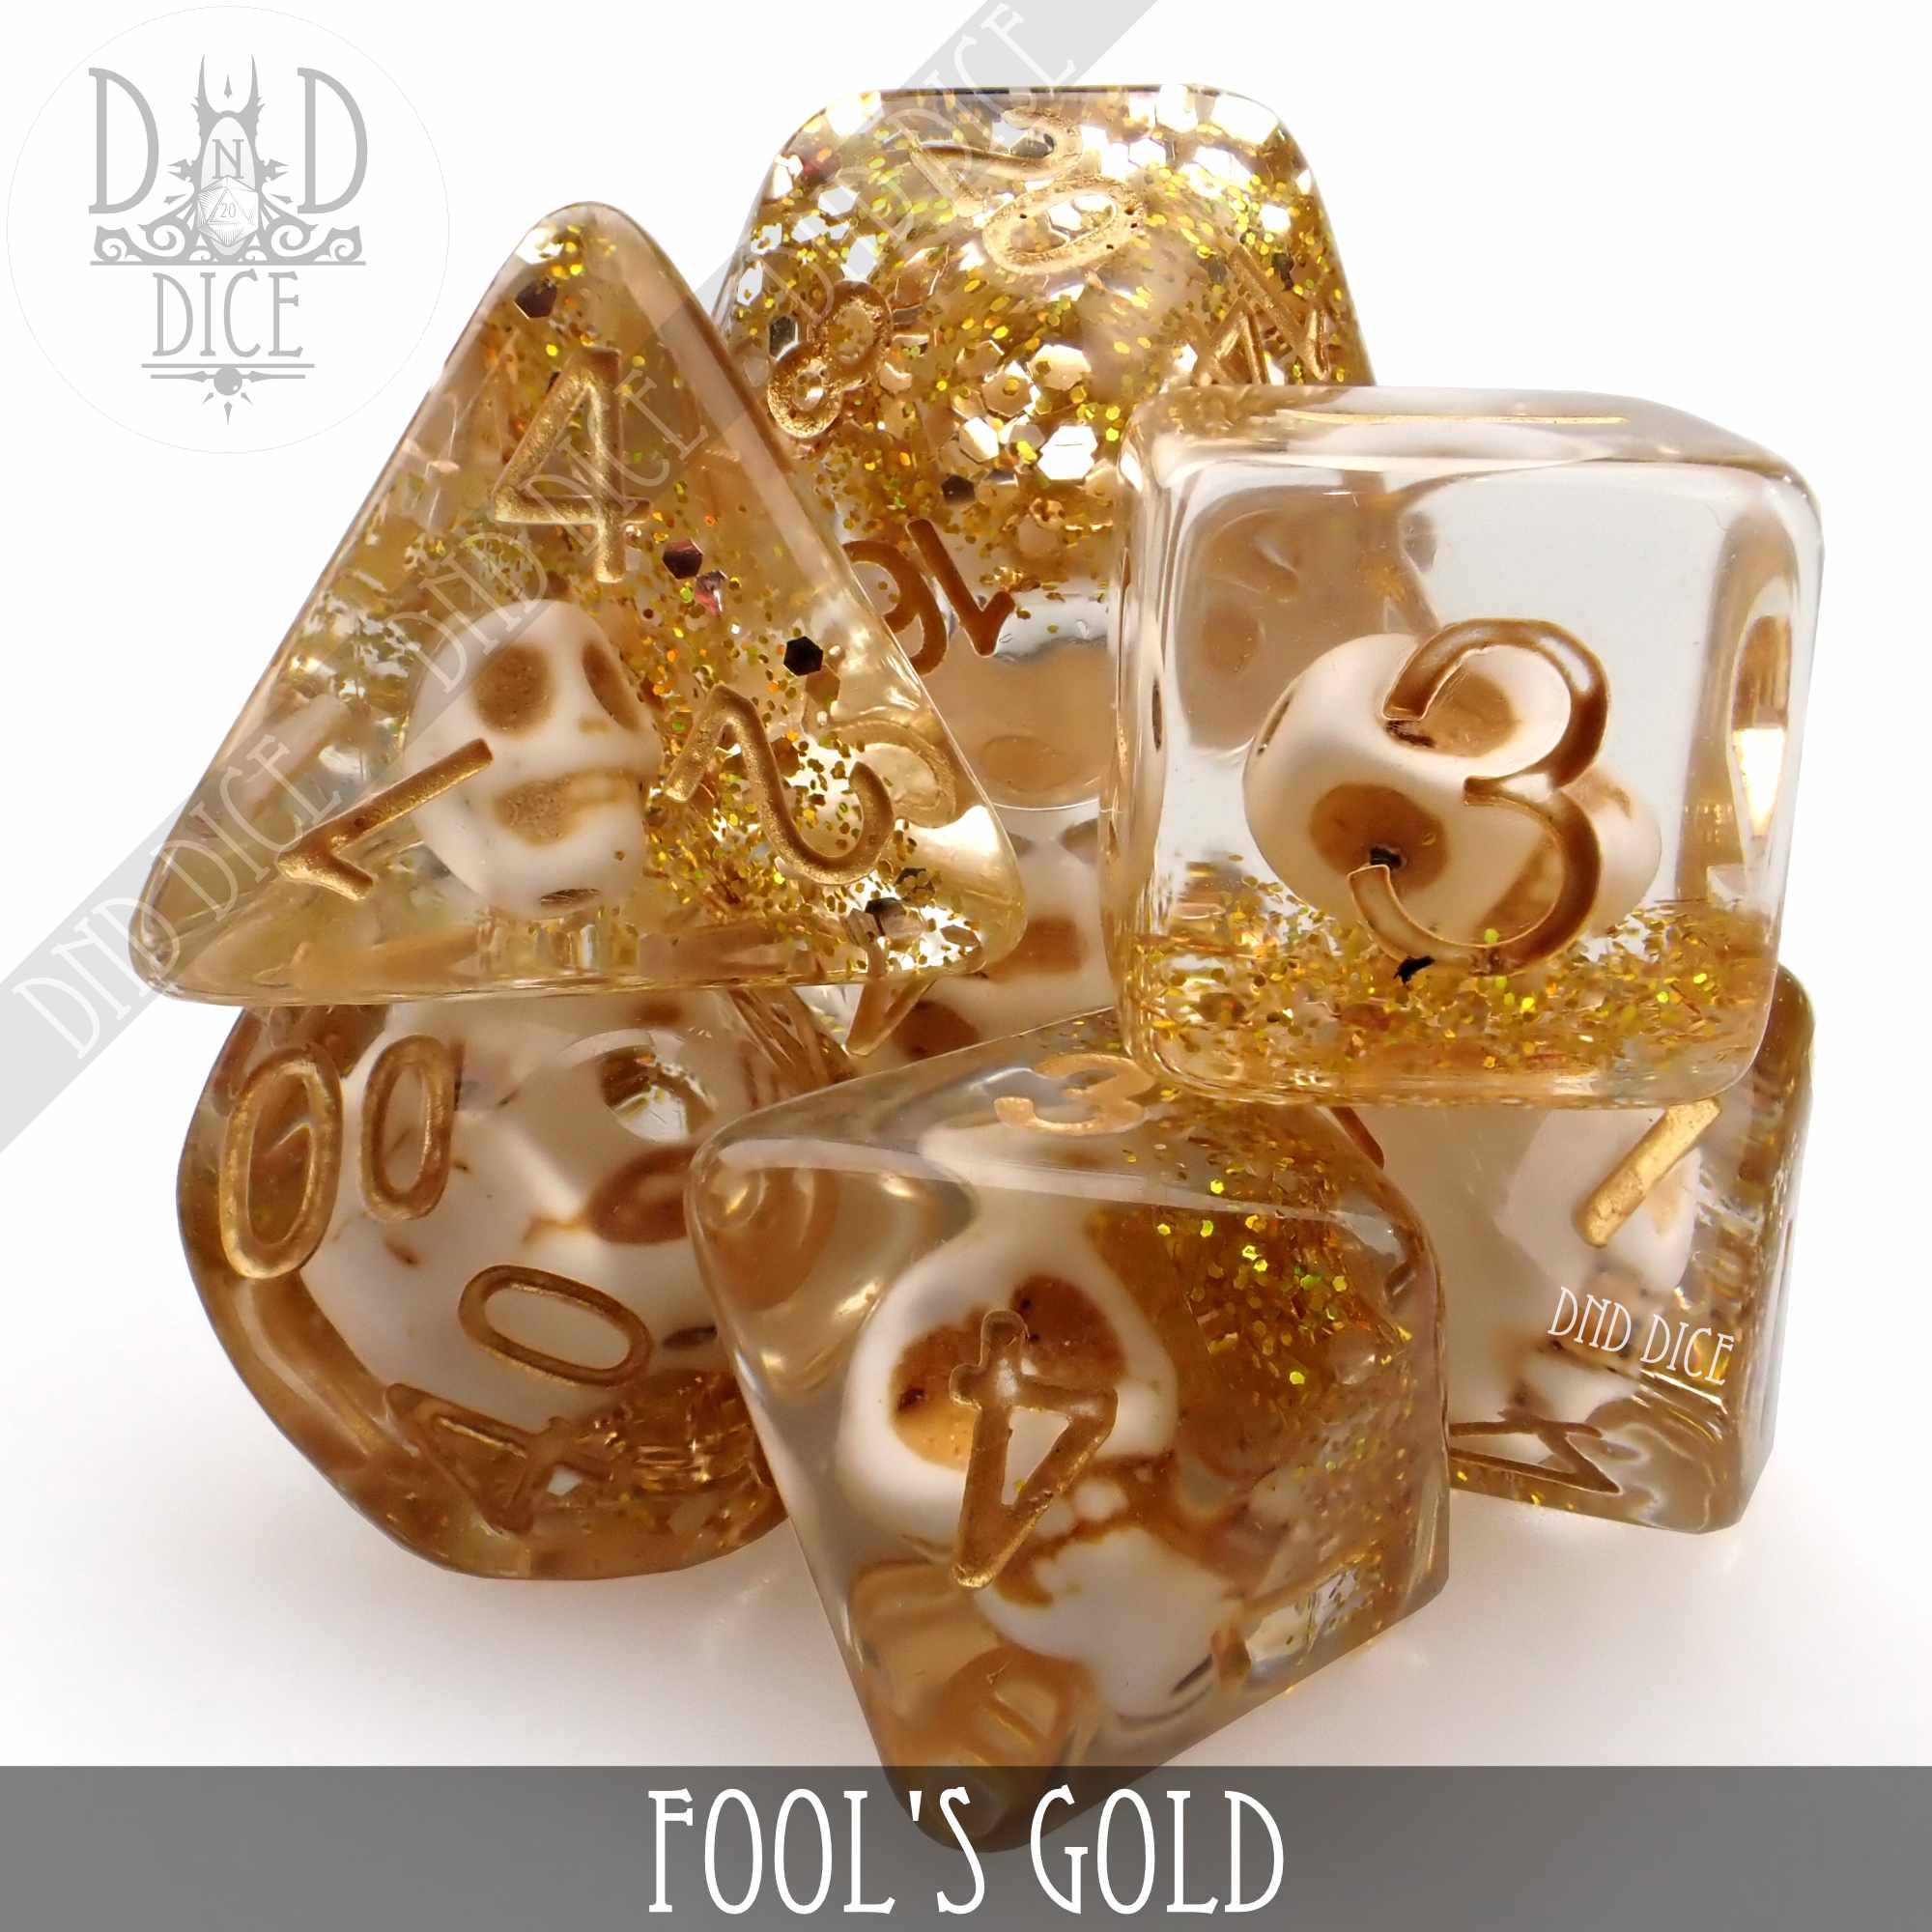 Fool's Gold Dice Set